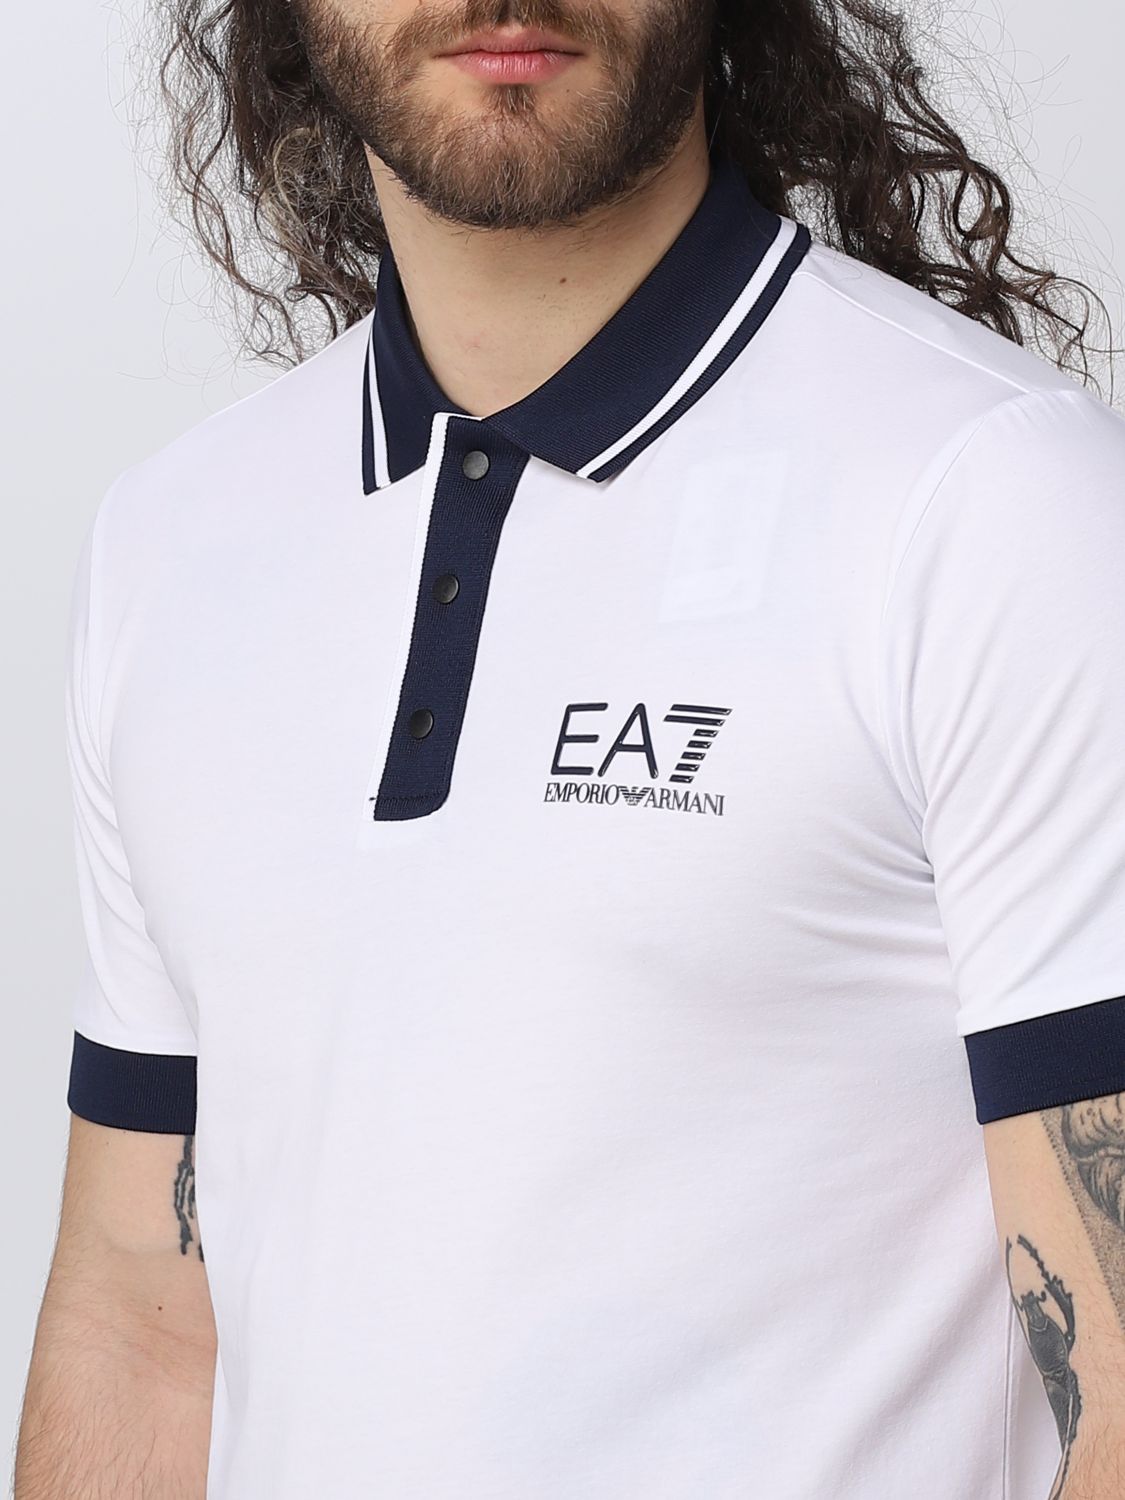 kroon Leeds Makkelijk te begrijpen EA7: polo shirt for man - White | Ea7 polo shirt 3RPF17PJ03Z online on  GIGLIO.COM